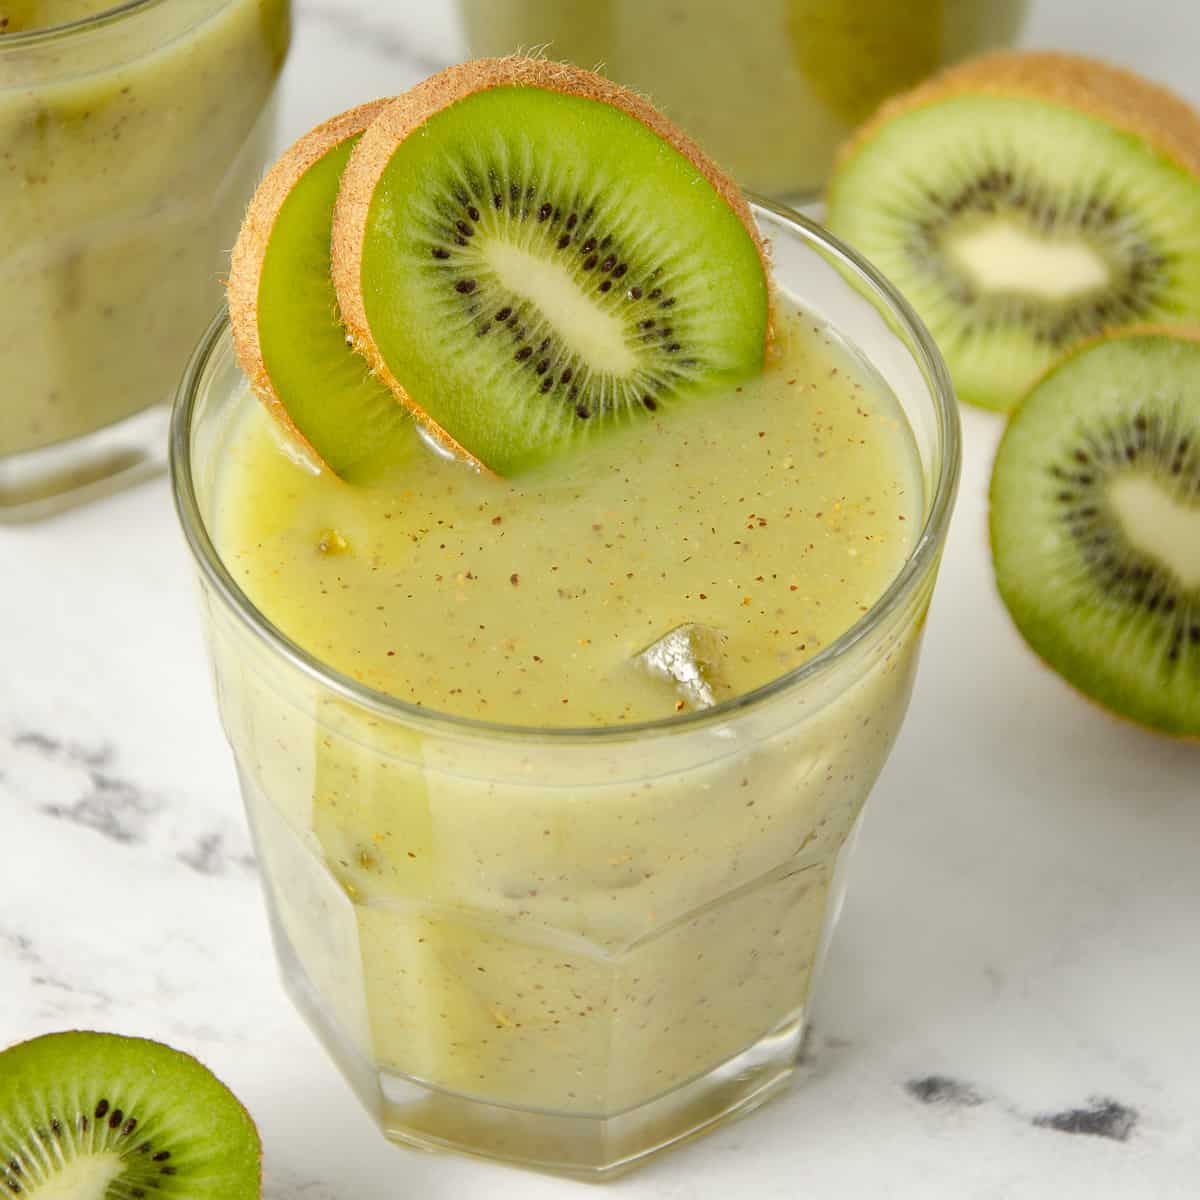 Kiwi fruit juicing recipes